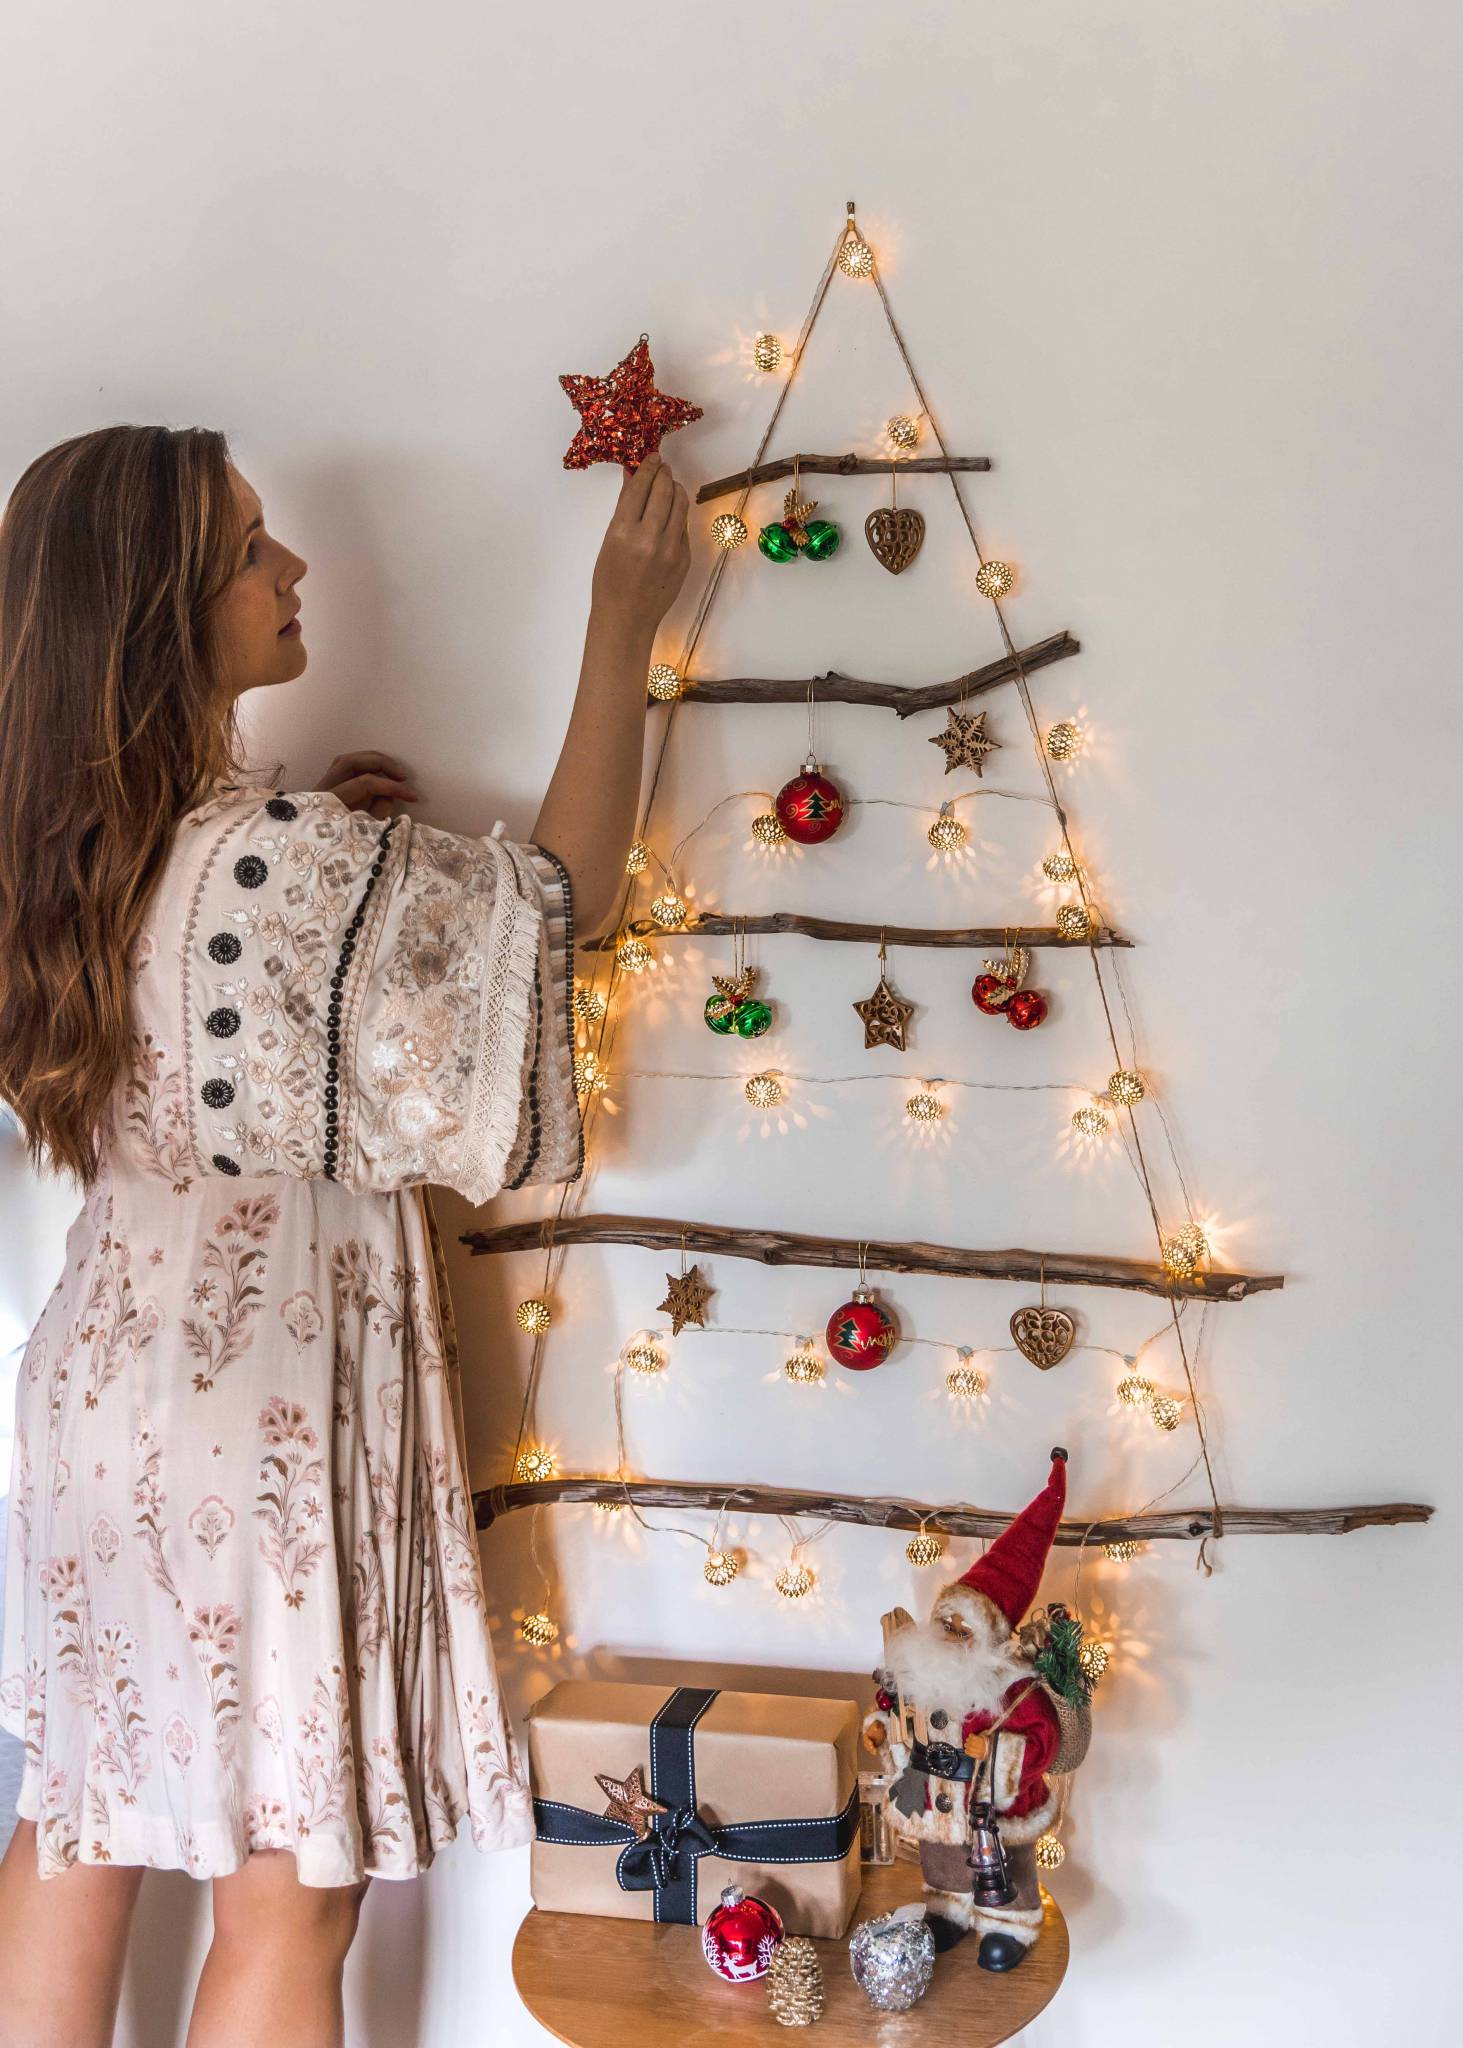 eco-friendly DIY Christmas Tree